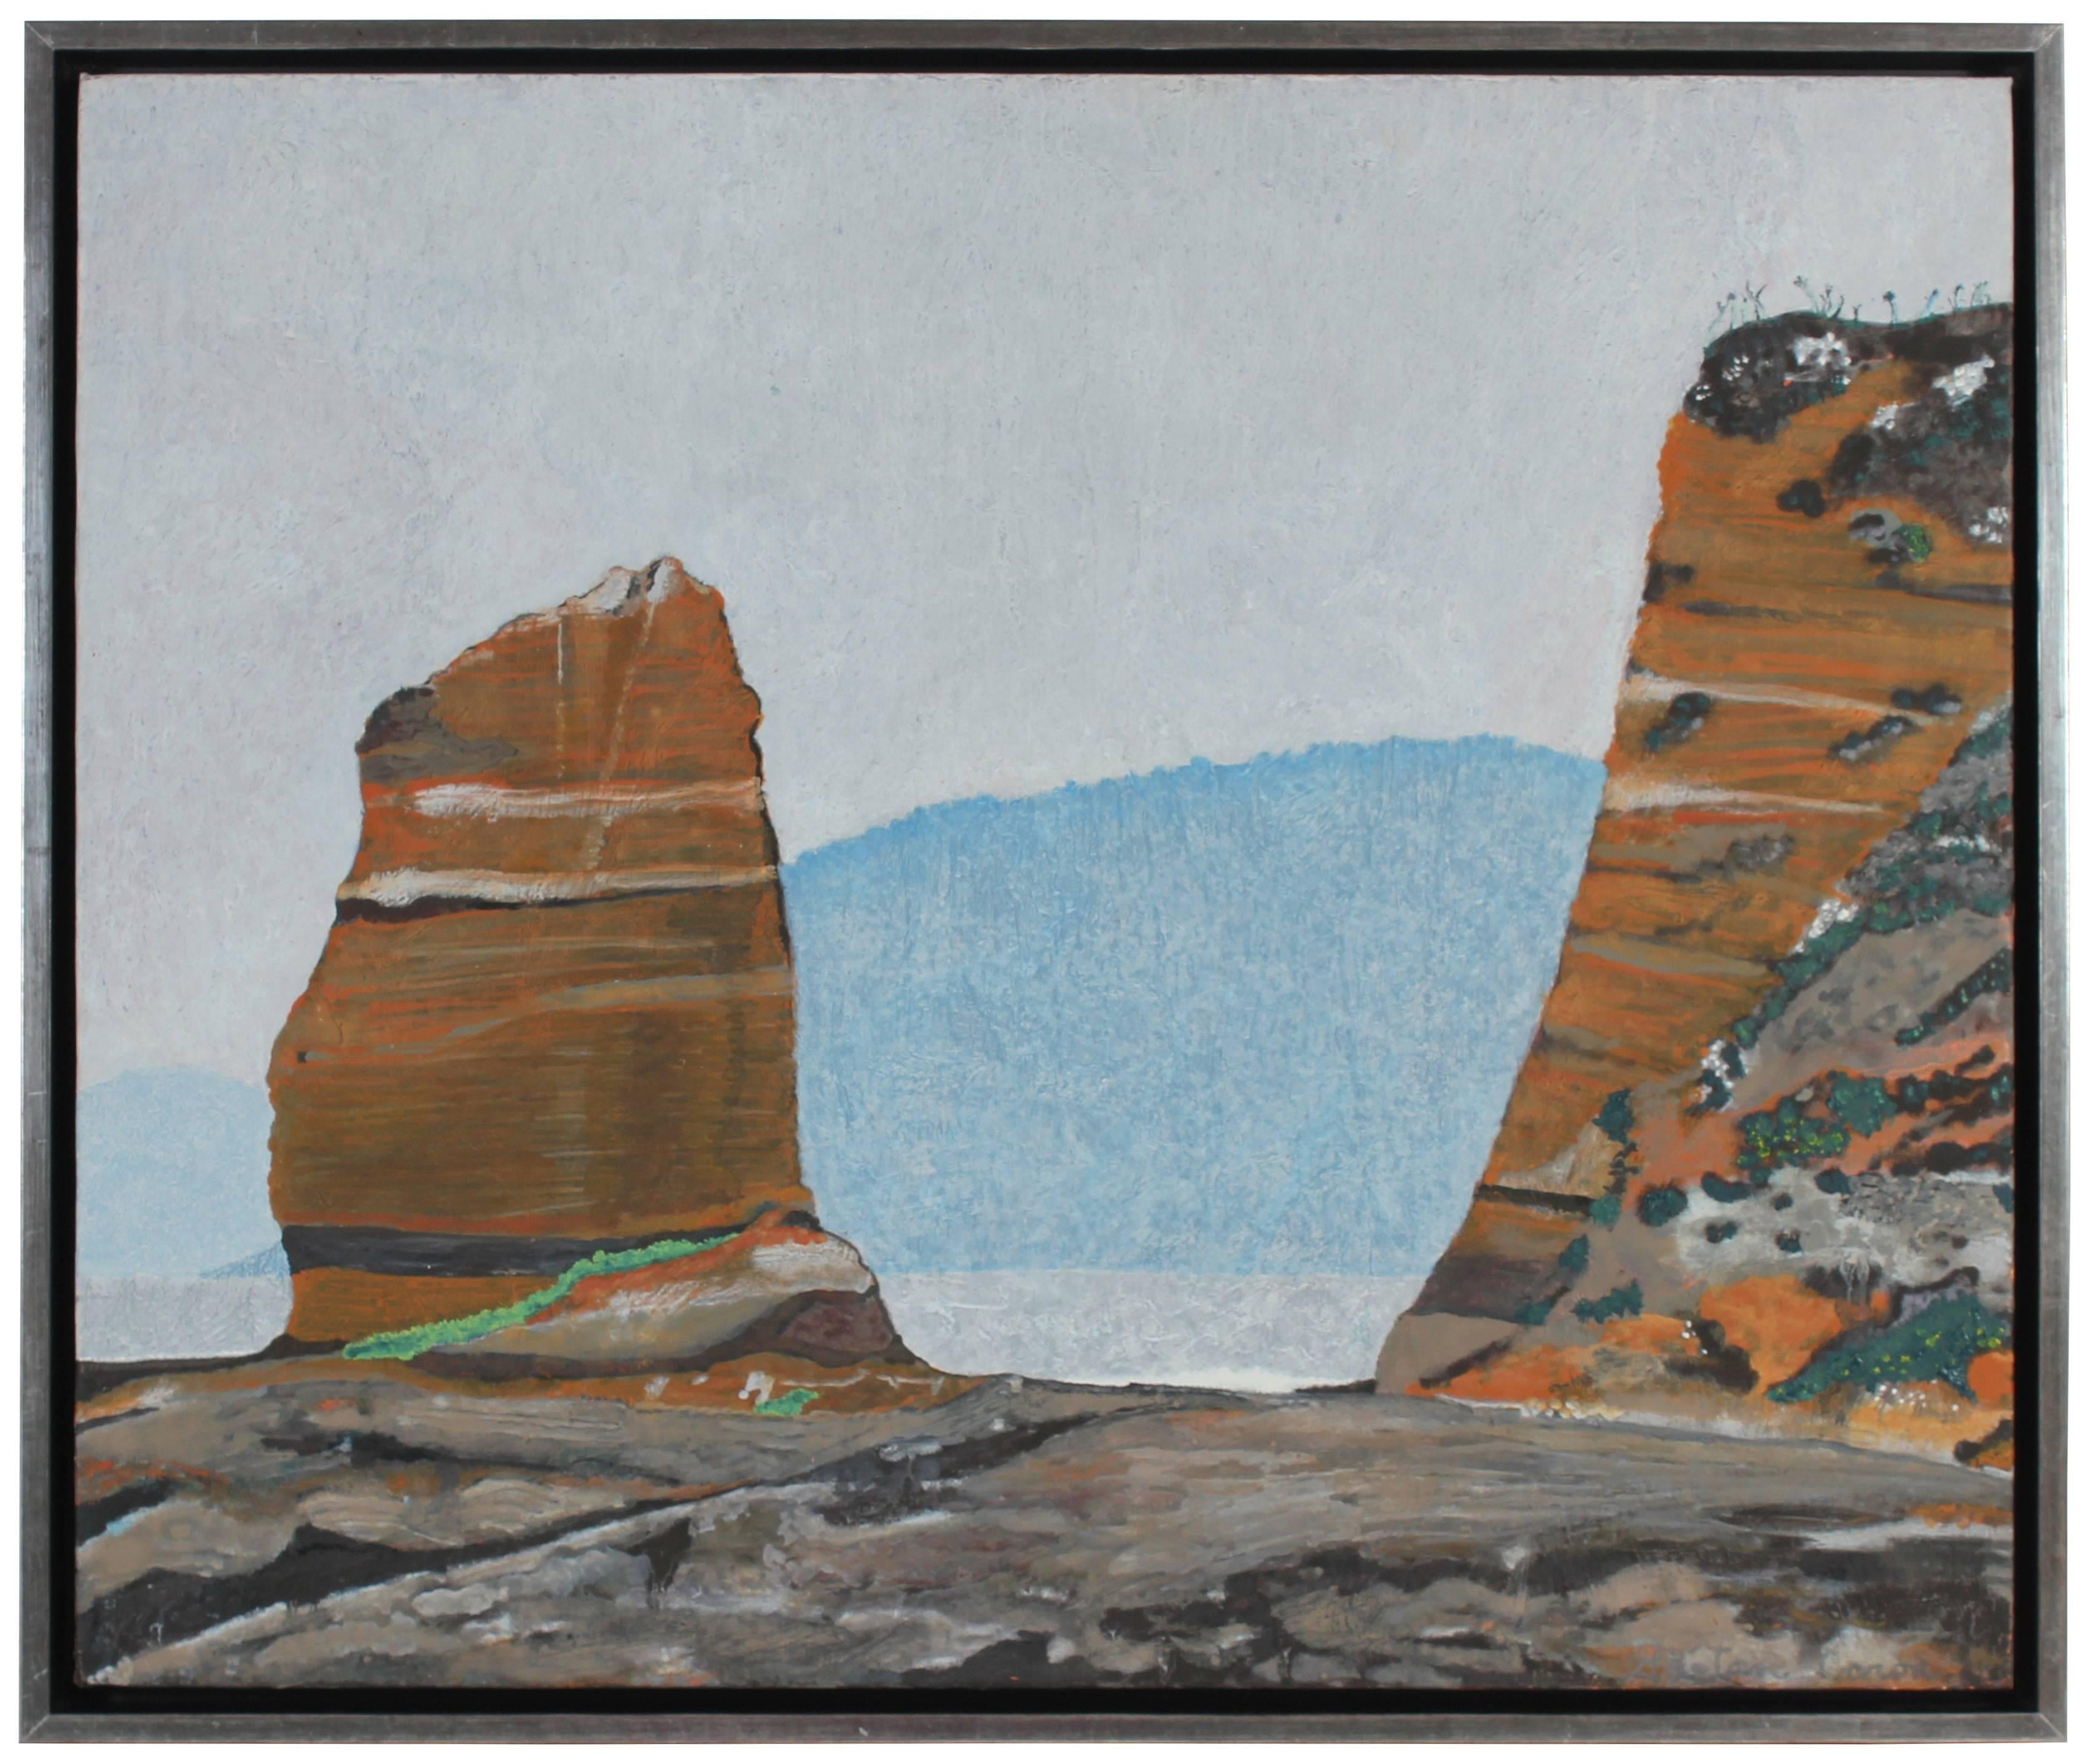 Gaétan Caron Landscape Painting - "The Lost Coast" California Seascape with Orange Sandy Cliffs & Rocks in Oil